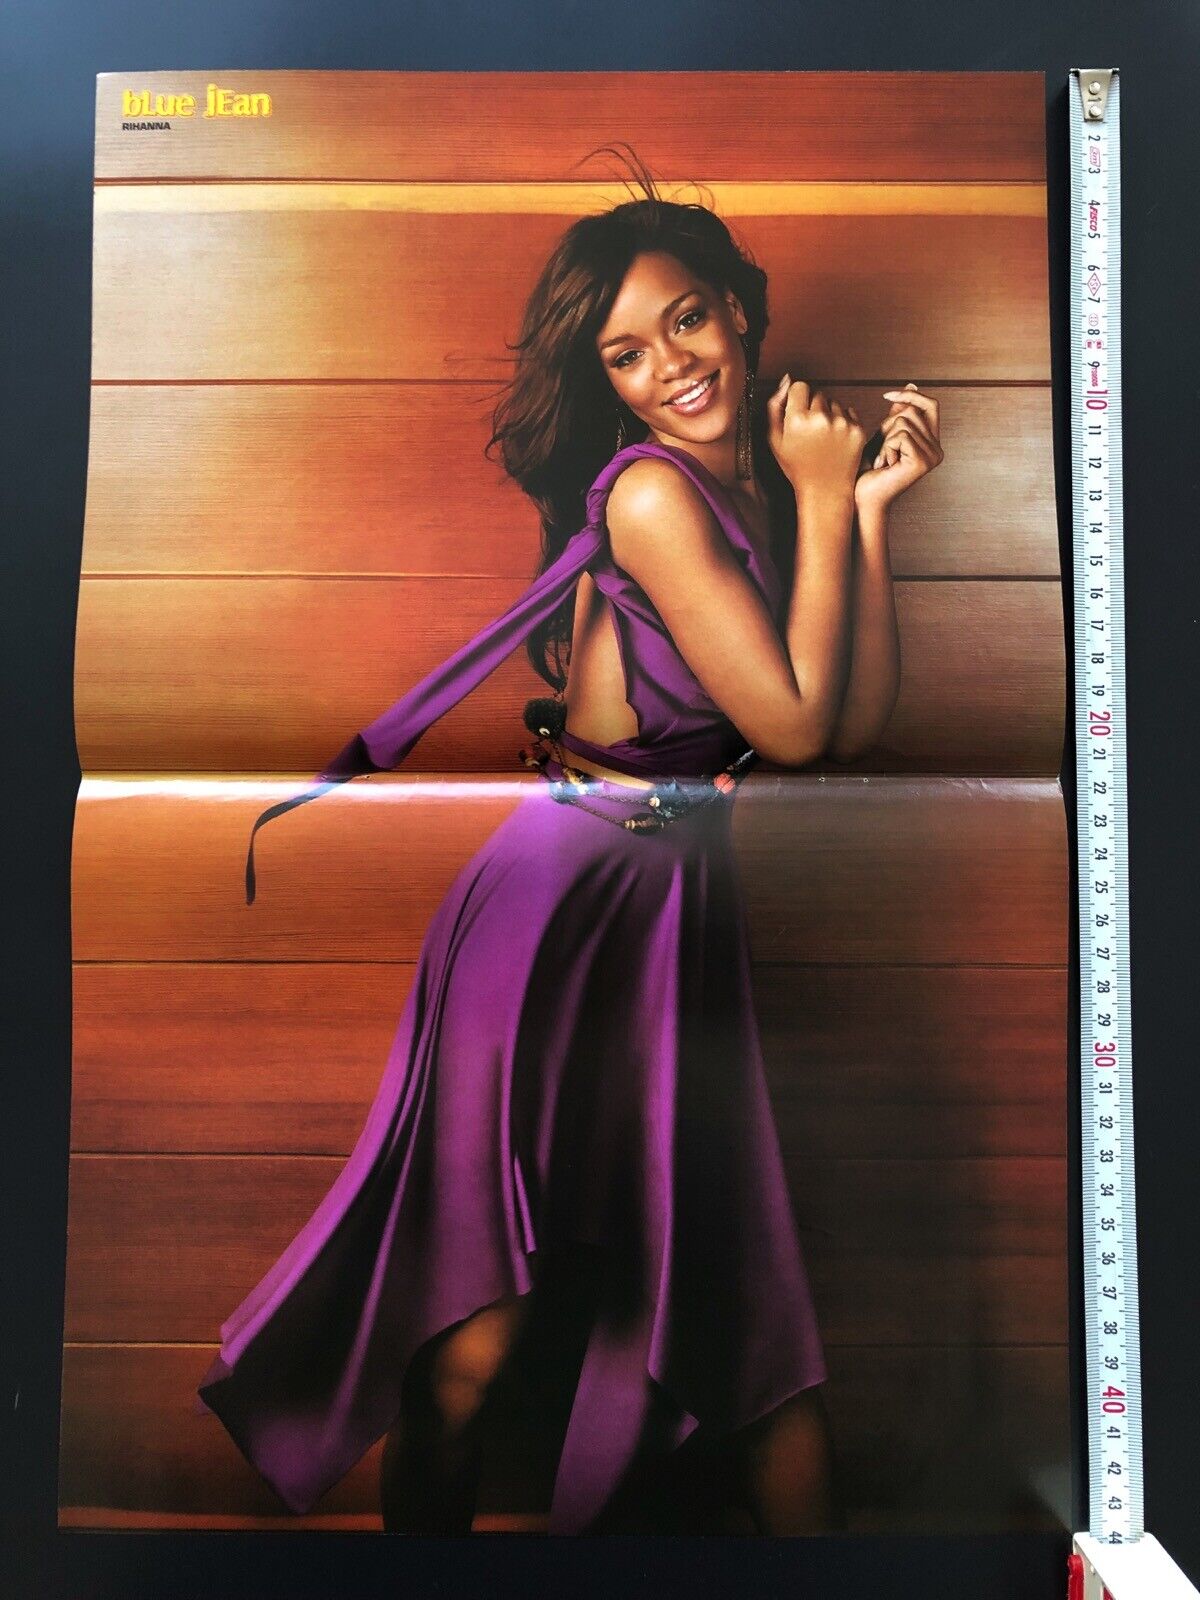 Rihanna B/w Razorlight Turkish Blue Jean Magazine Centerfold Poster